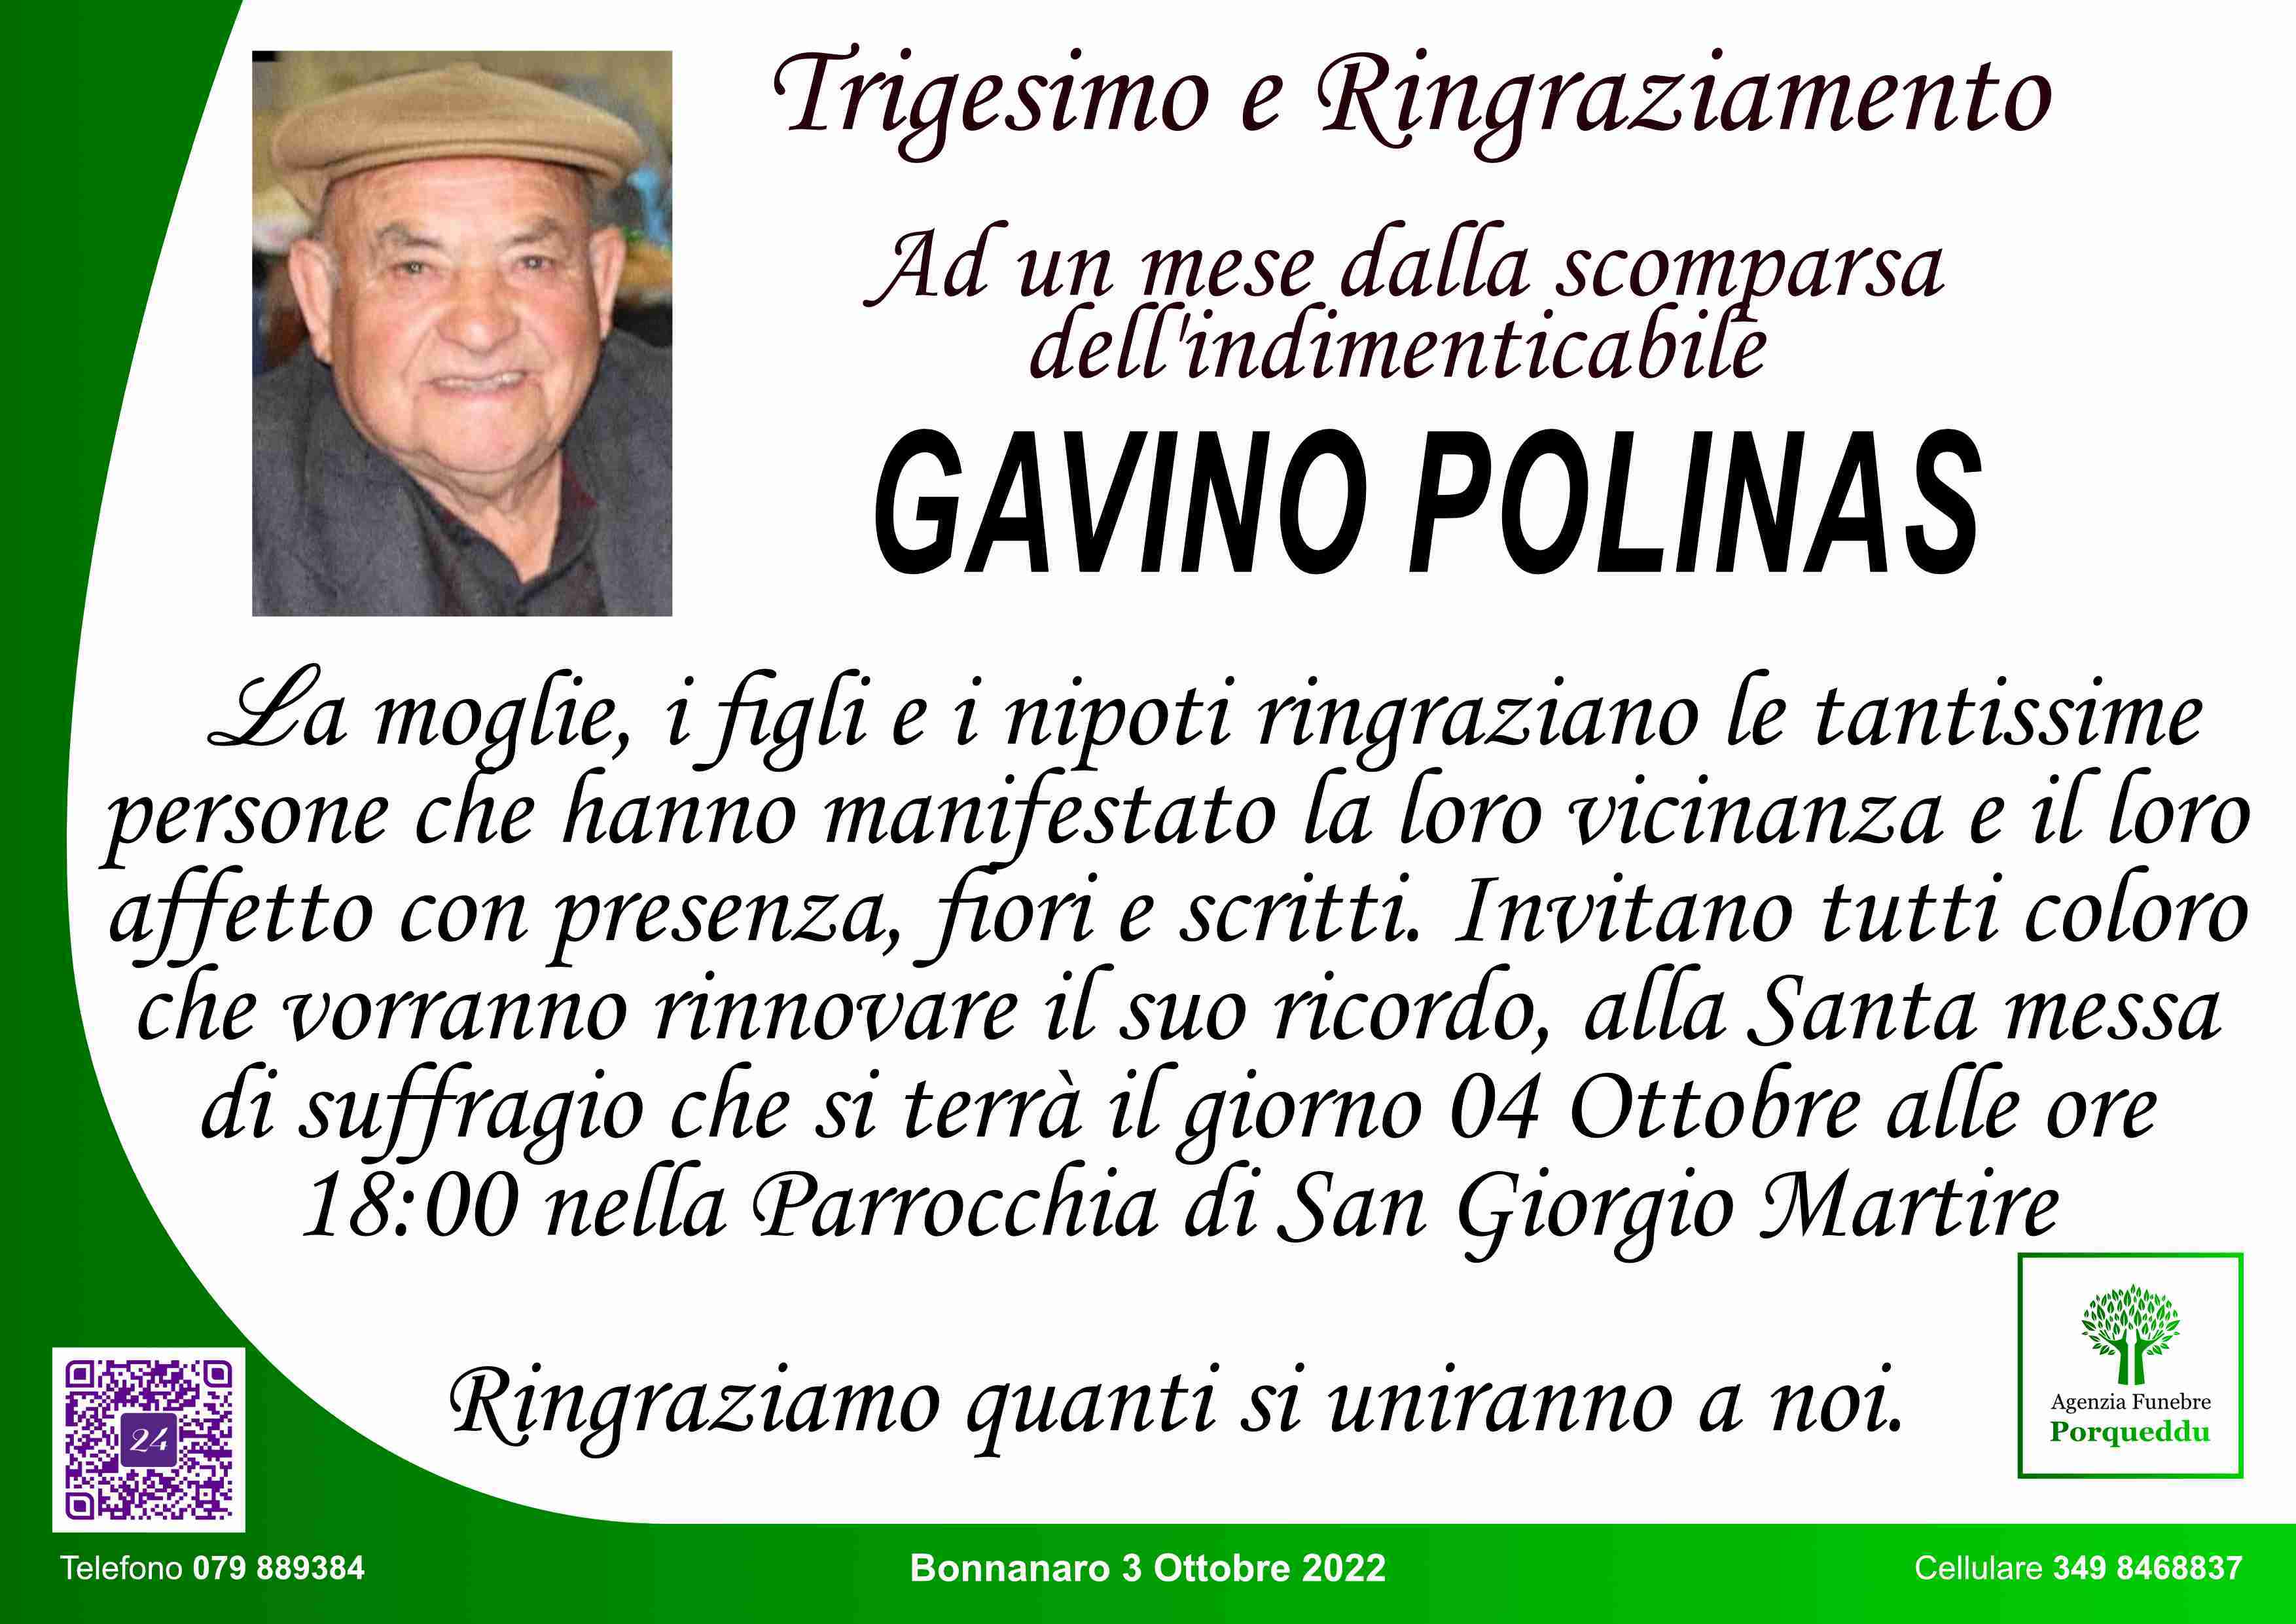 Gavino Polinas